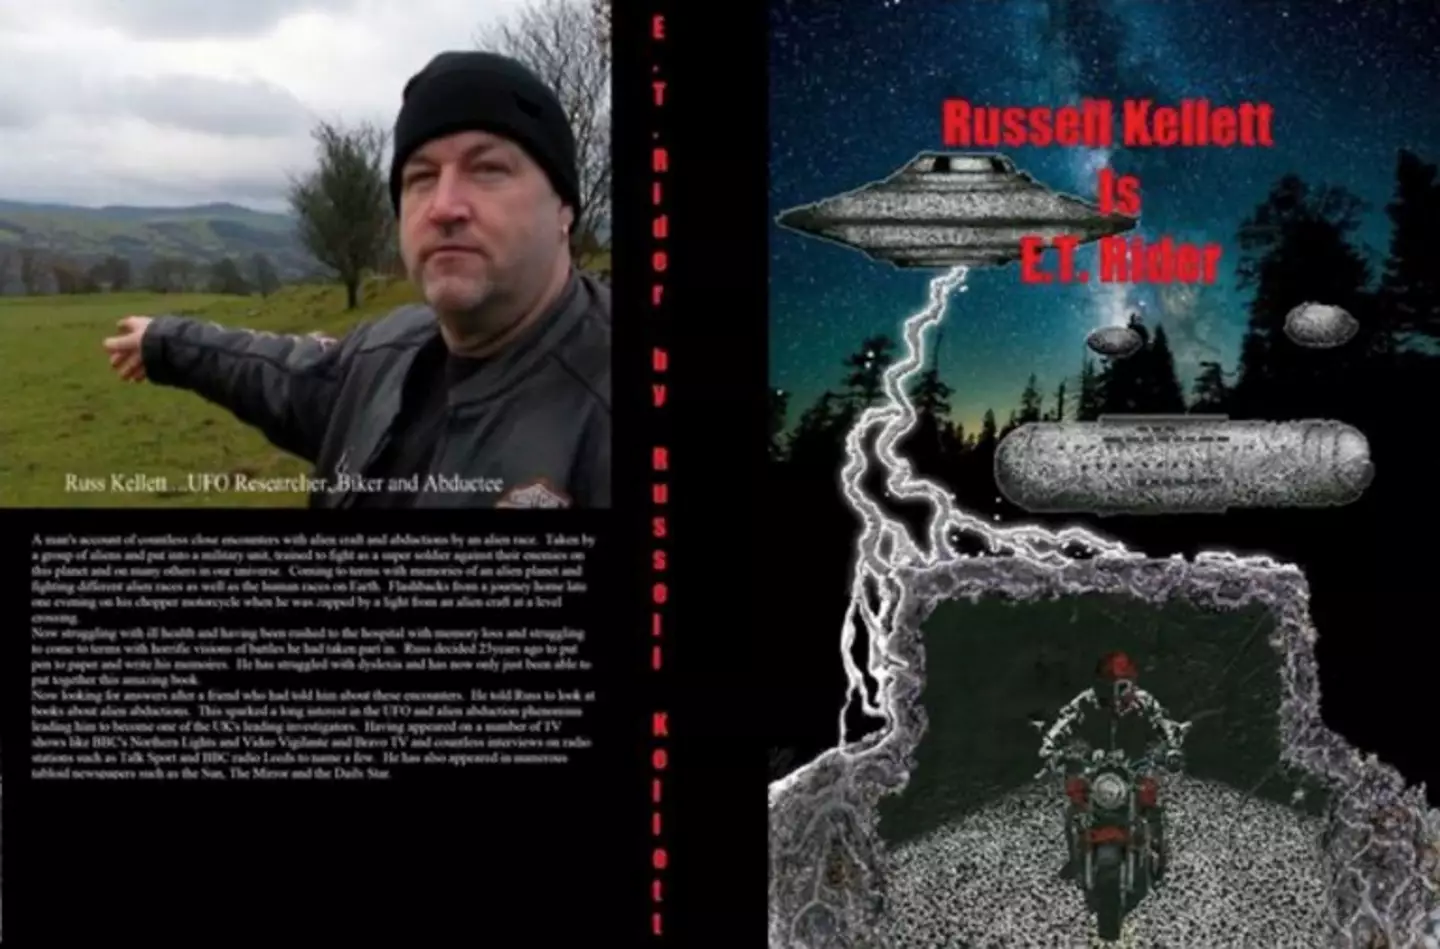 Russ Kellett released a book about his alien encounters.